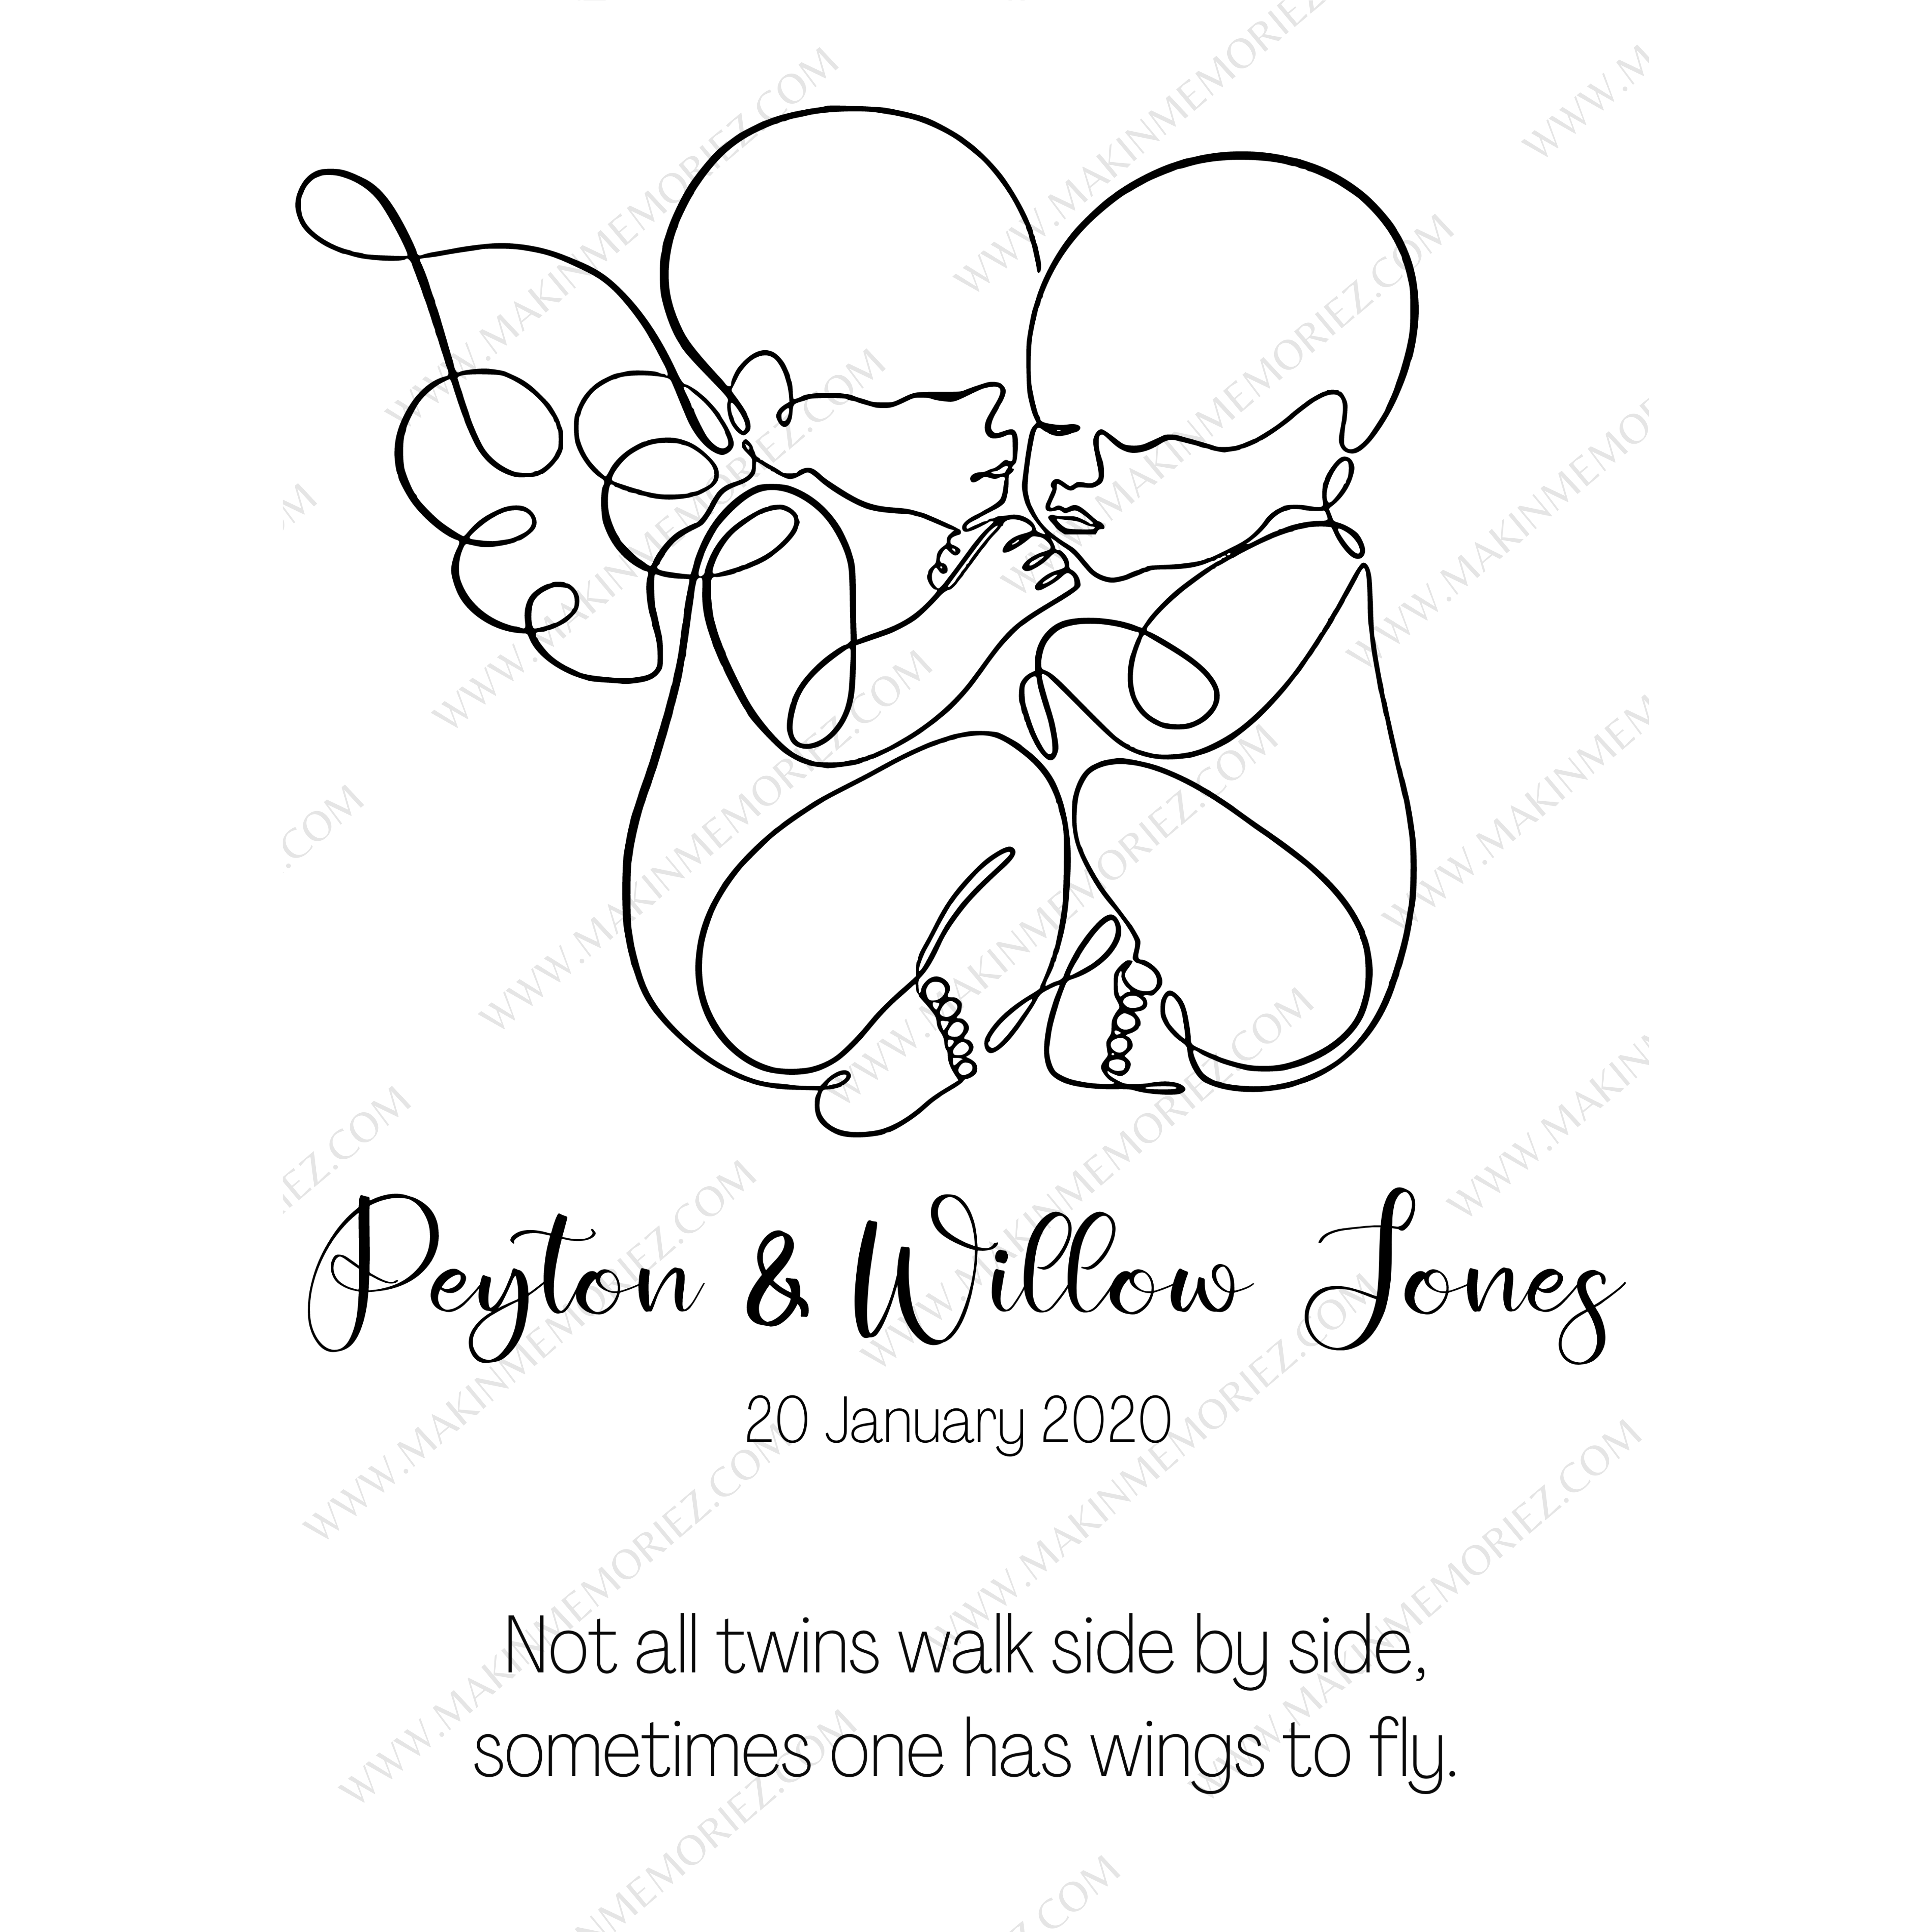 Free Baby Angel drawing free image download